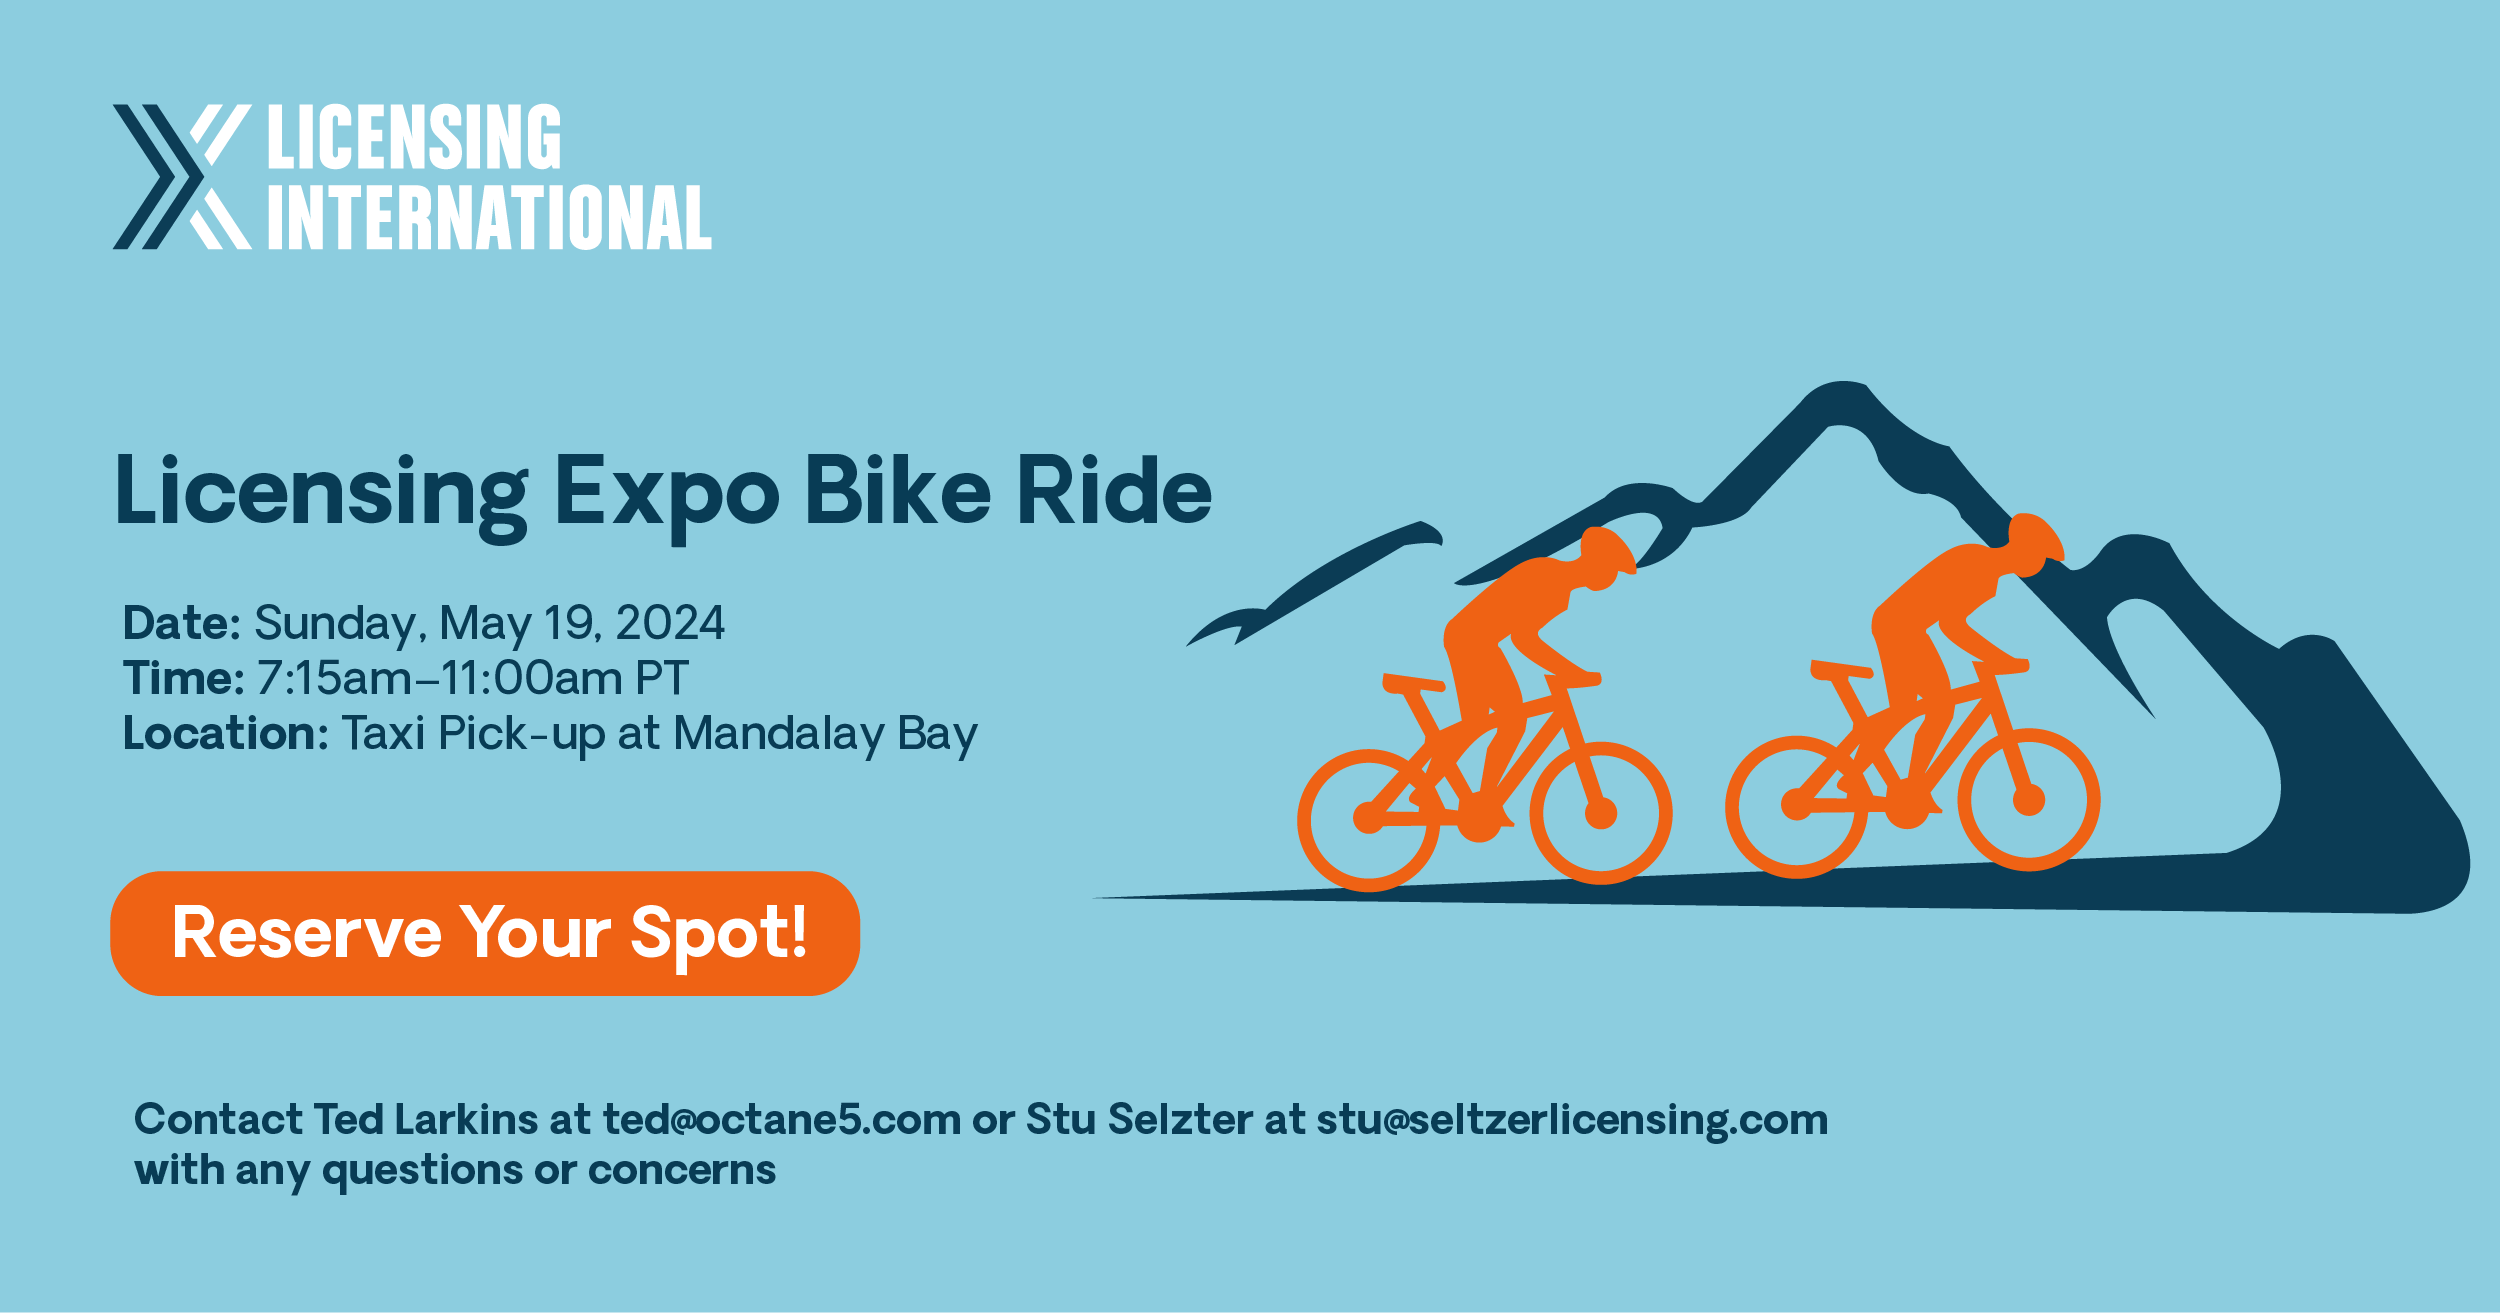 Licensing Expo Bike Ride image